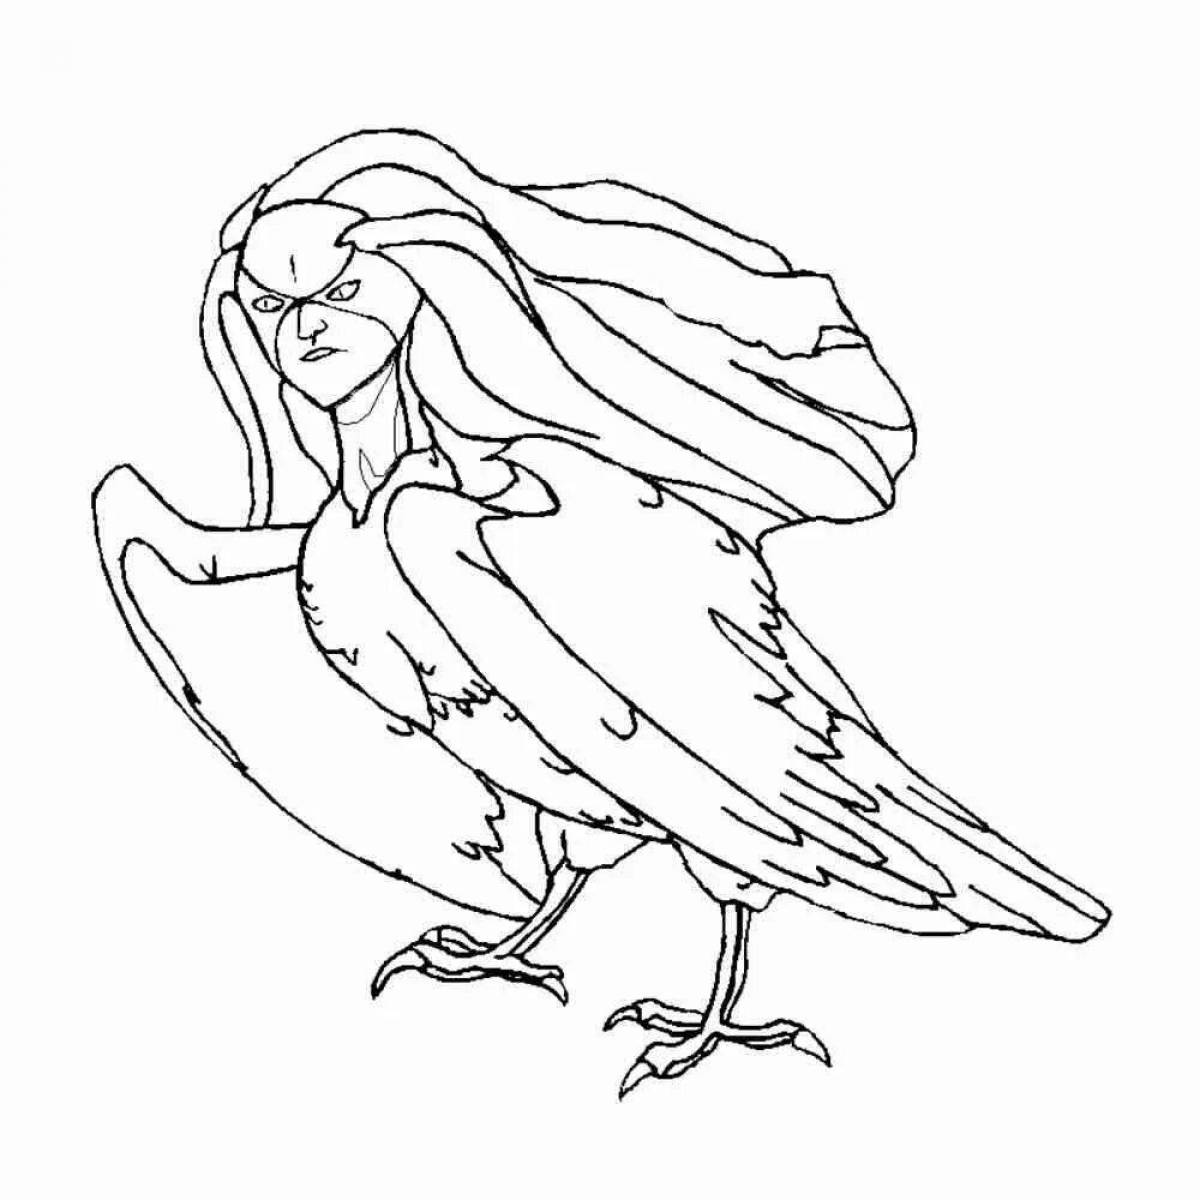 Serendipitous sirin bird coloring book